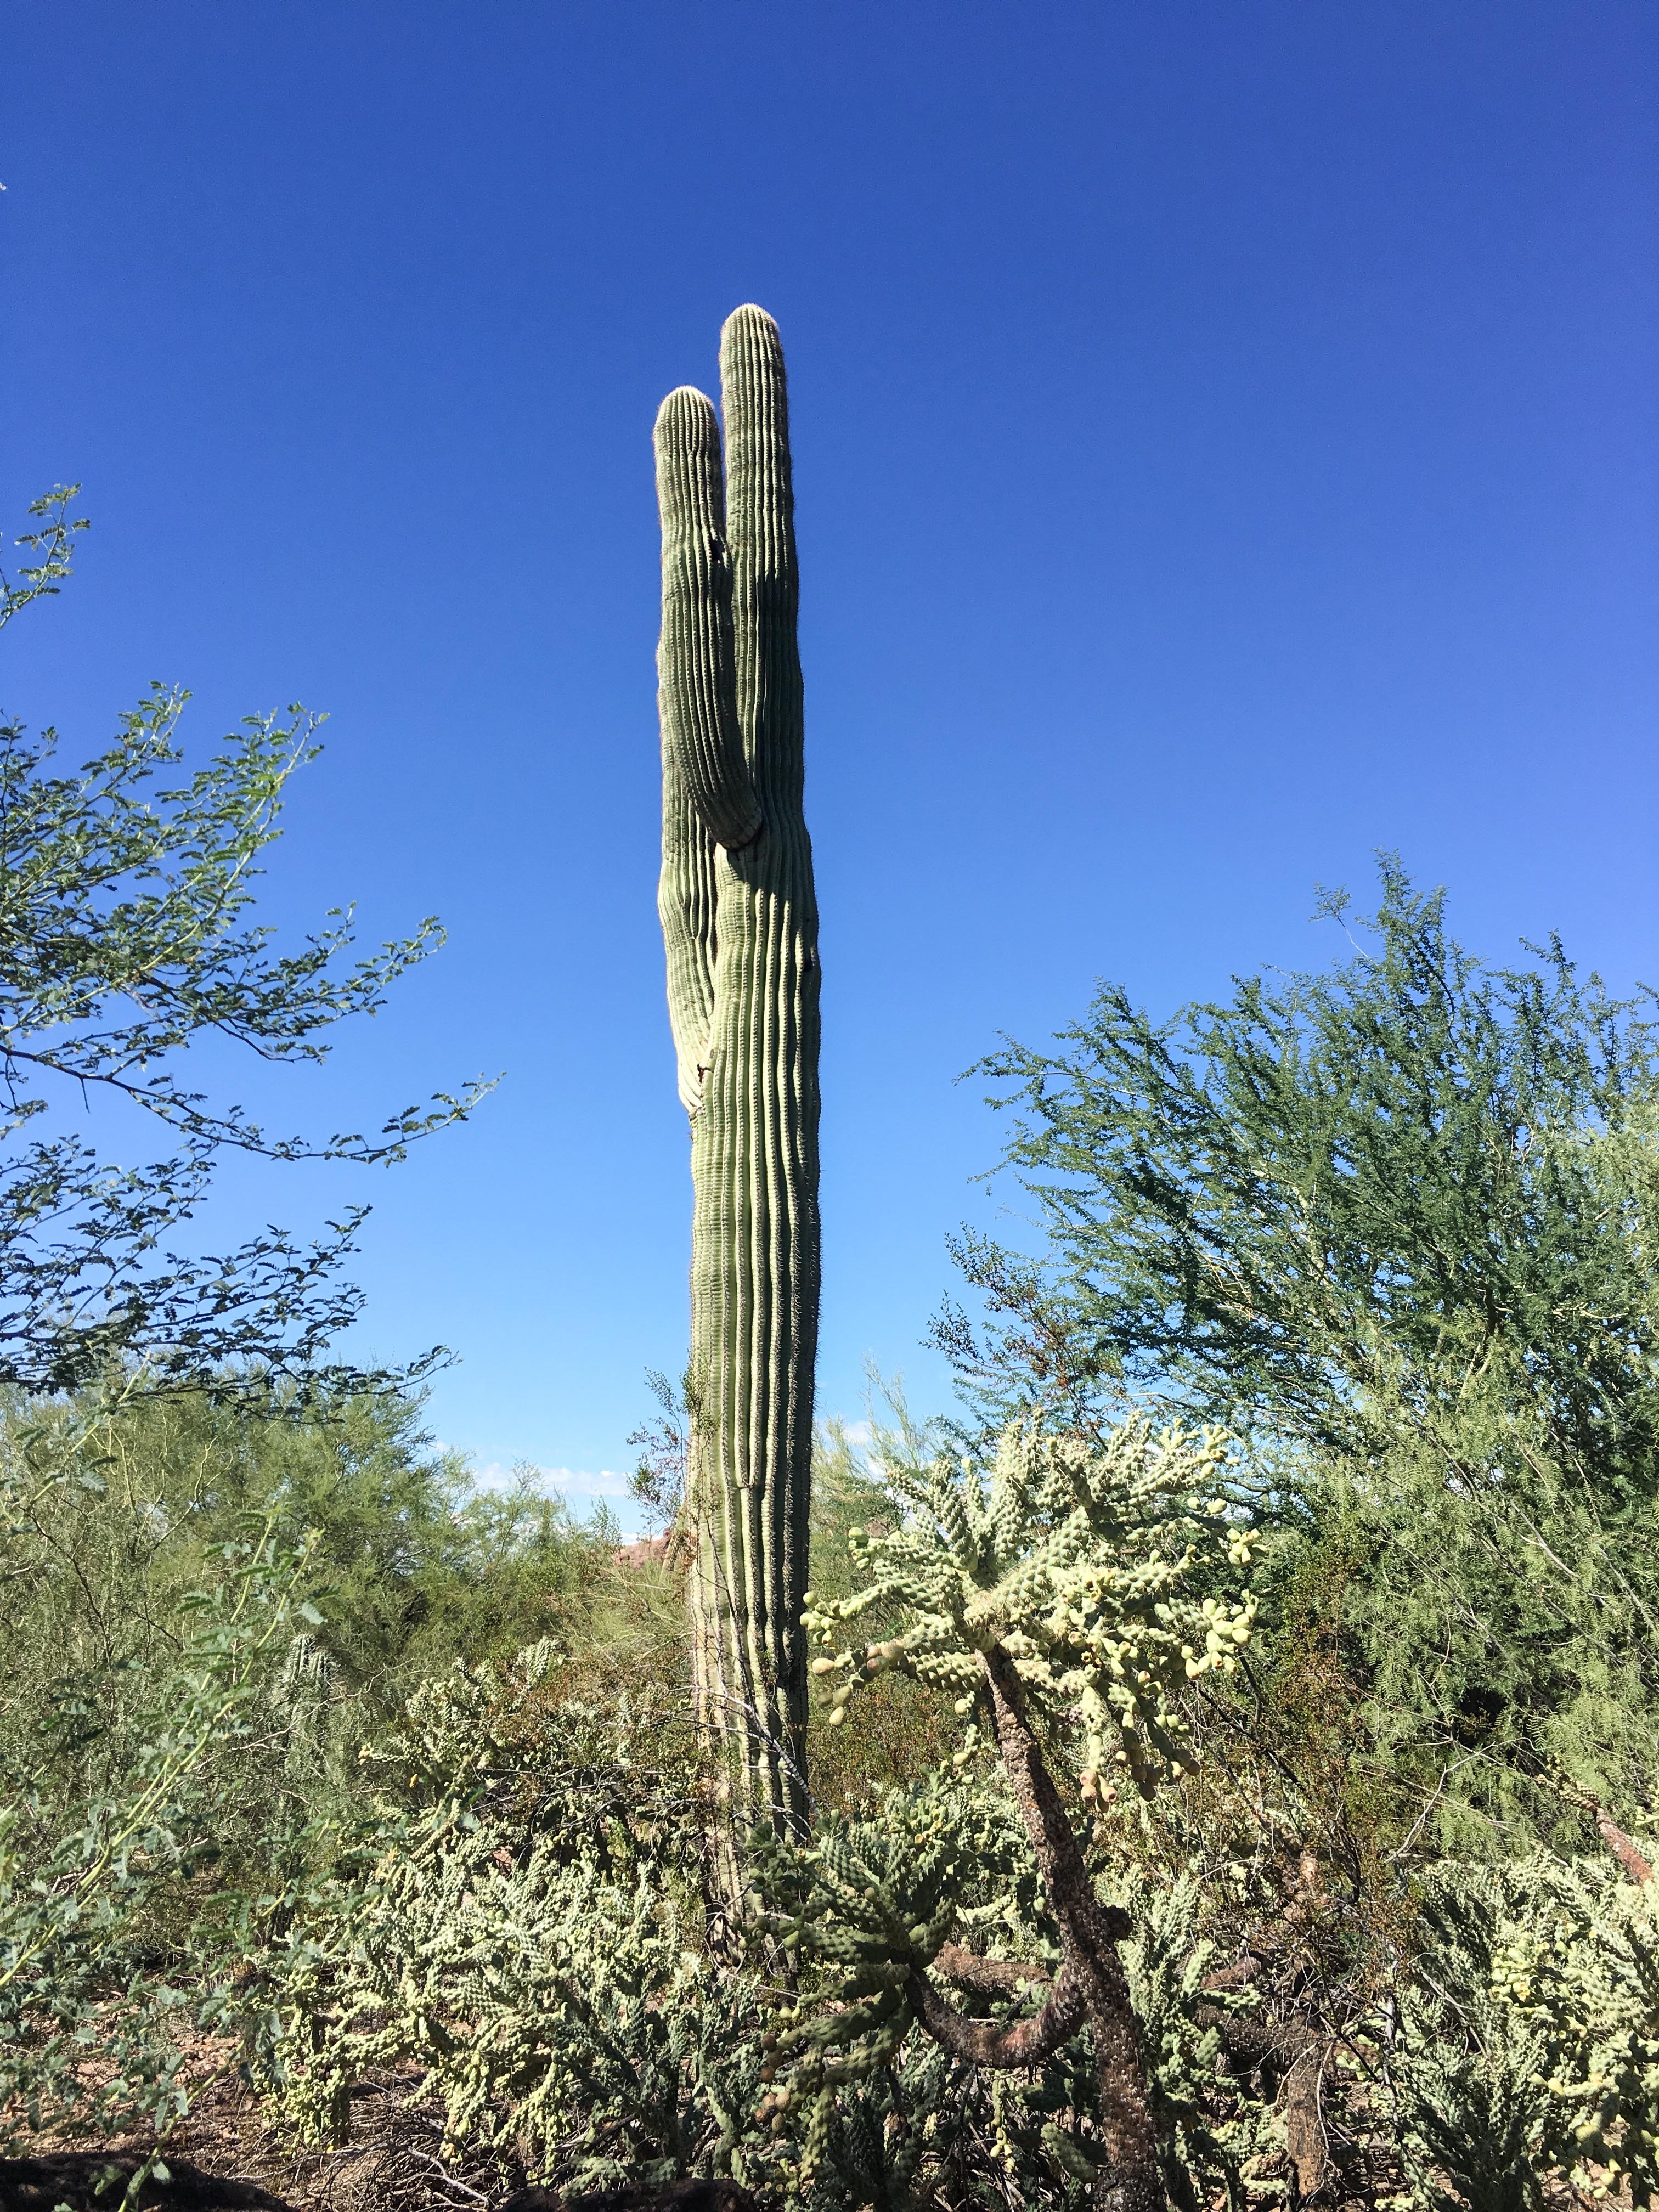 Kaktus in Arizona.